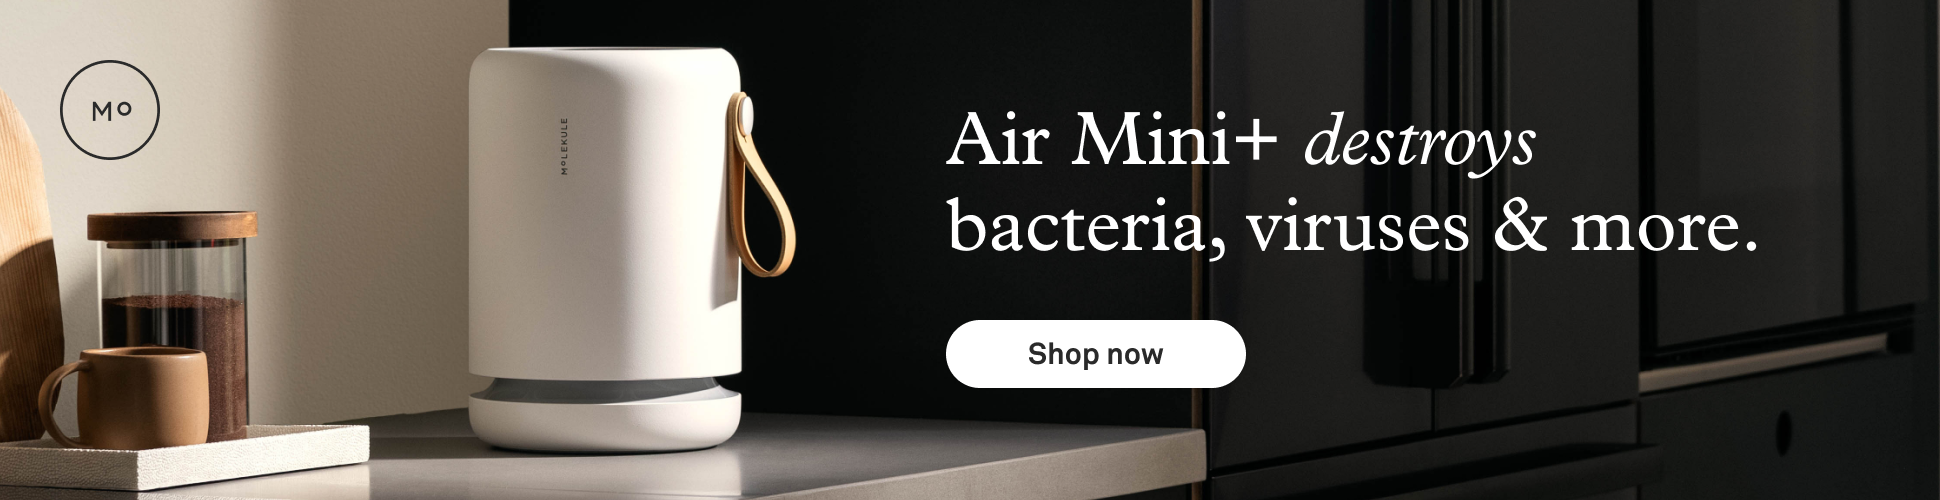 Air Mini+ destroys viruses, bacteria, & more.